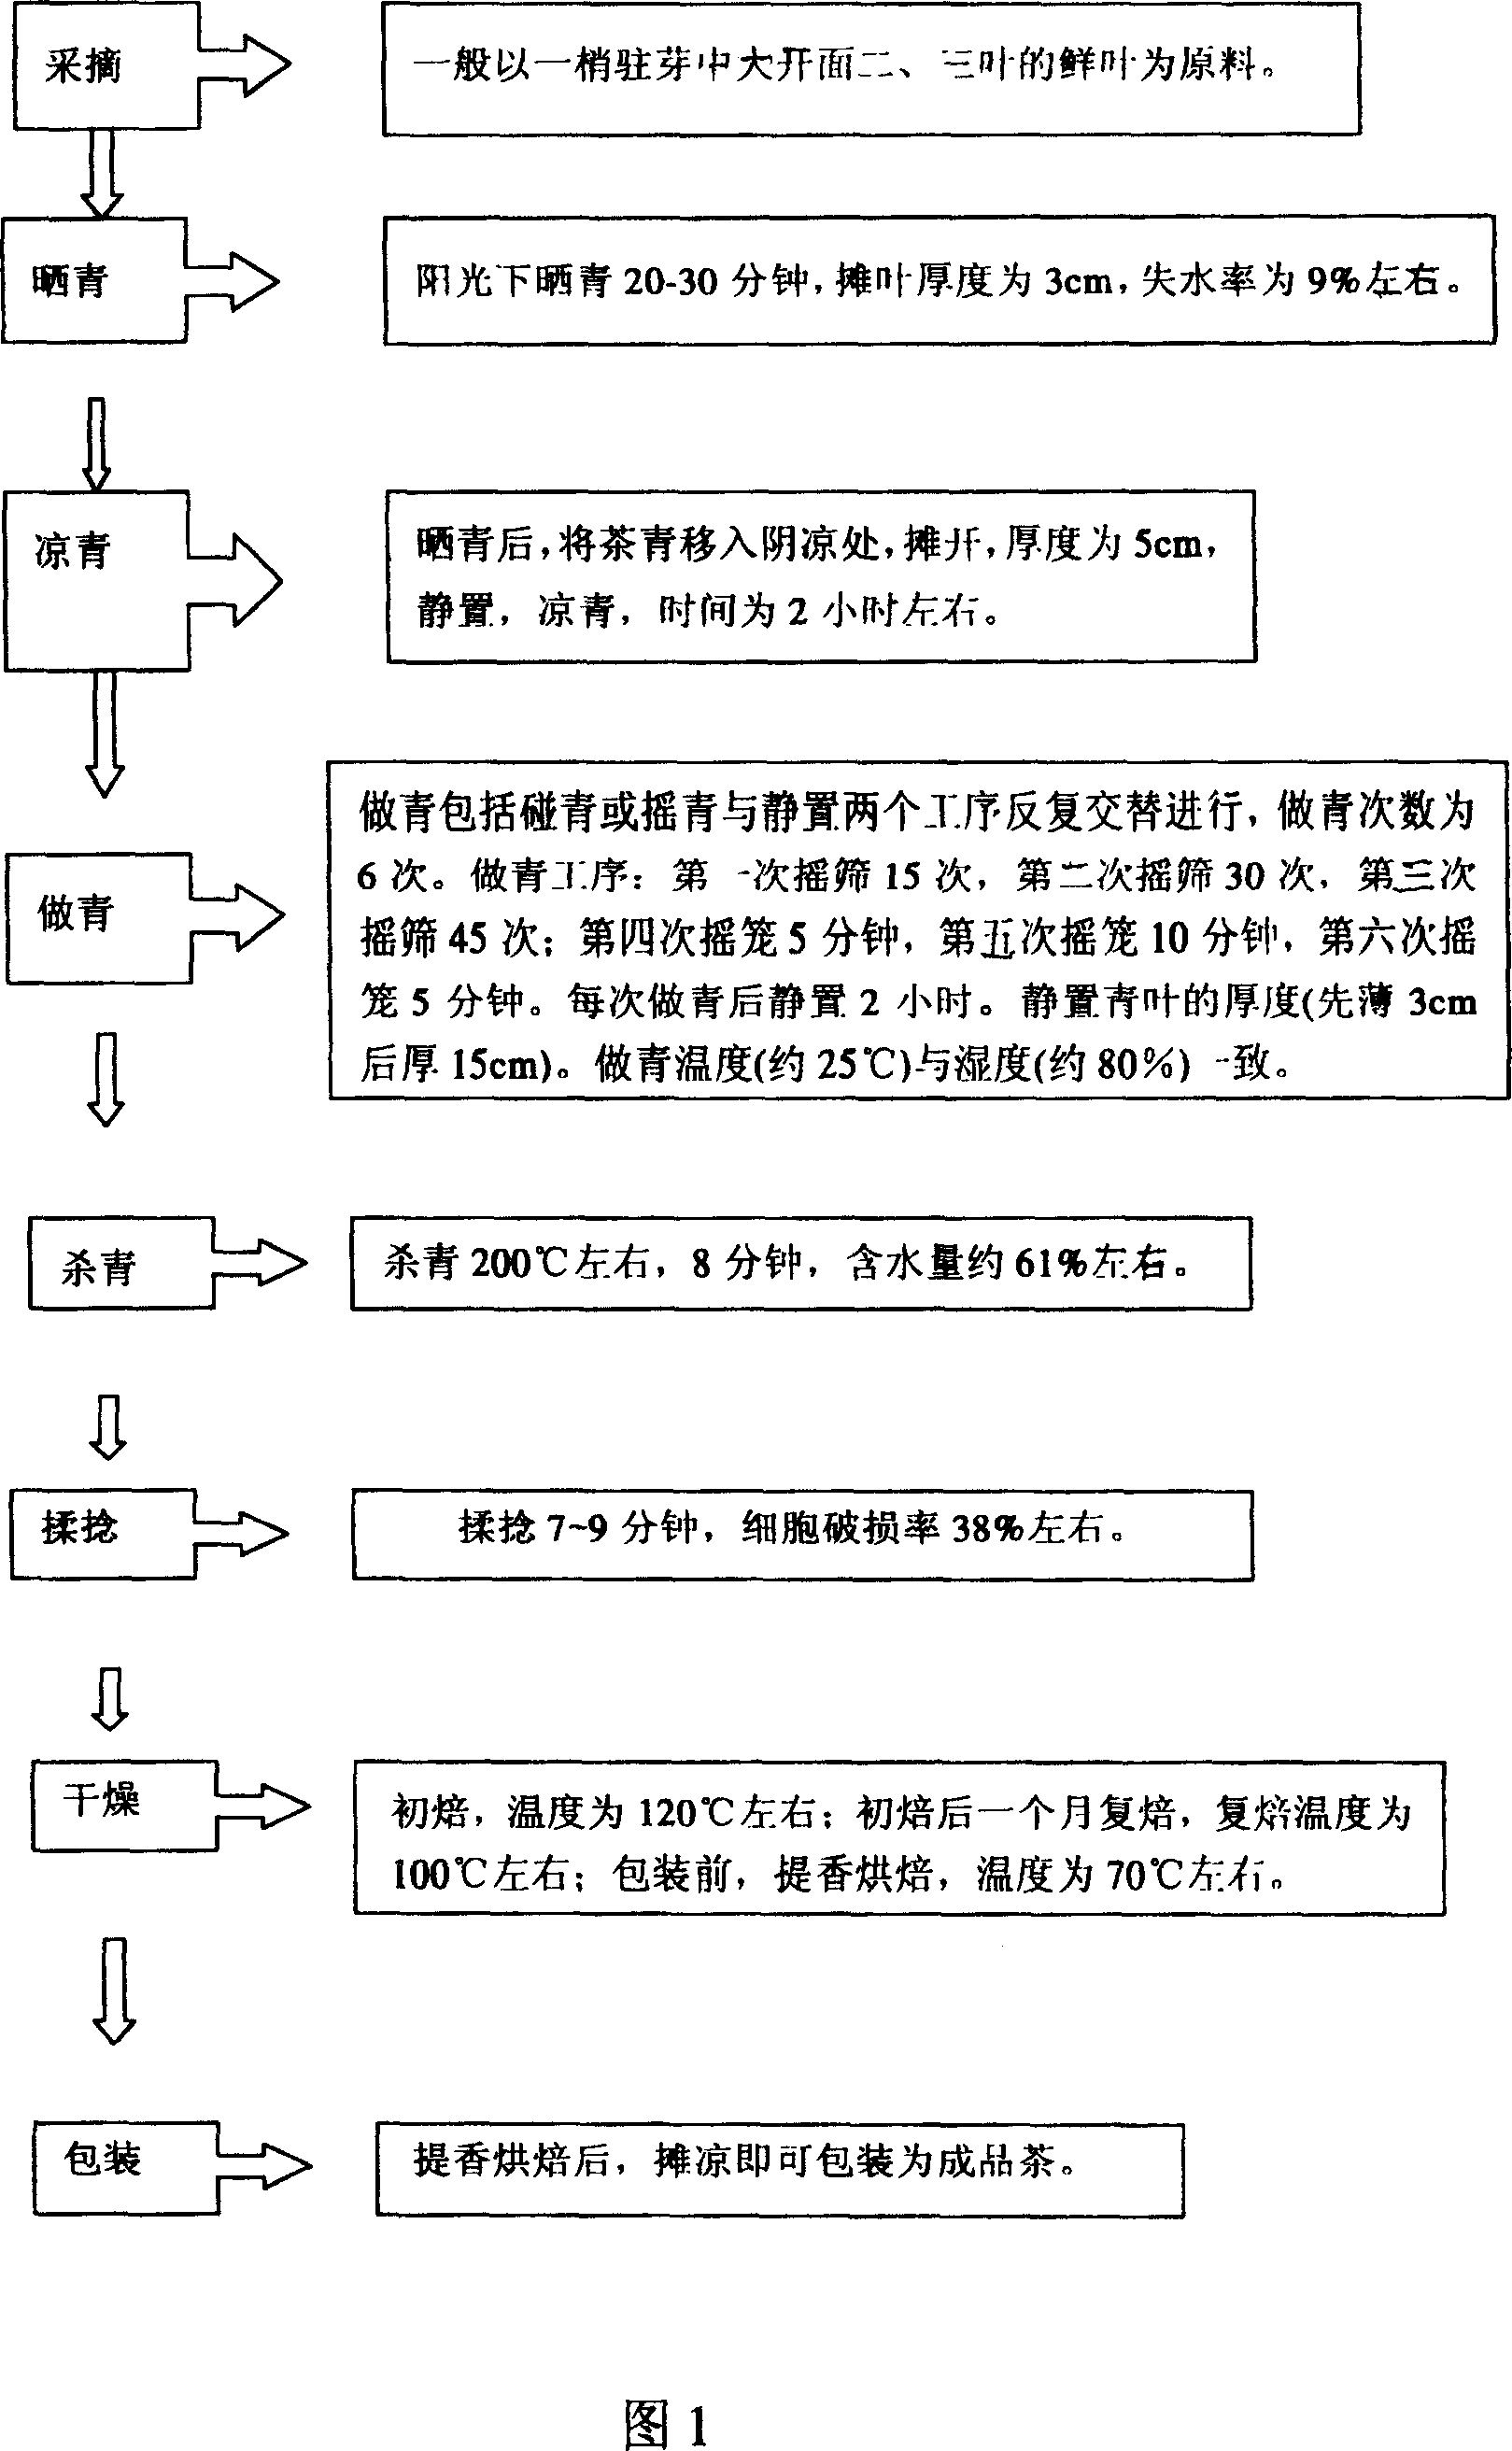 Processing method of Lingtou Dancong Tea